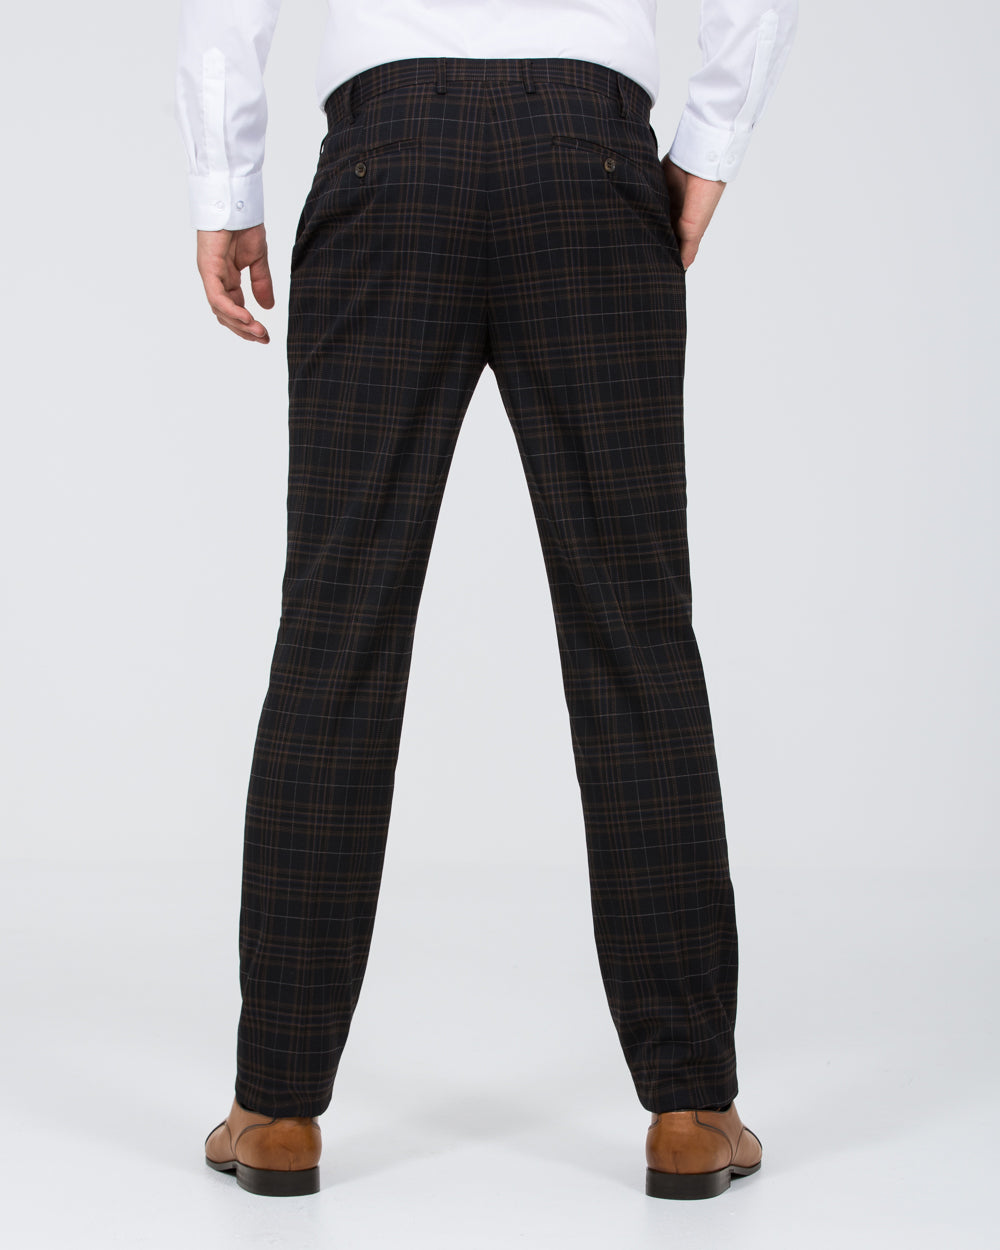 Skopes Alton Slim Fit Tall Suit (brown/blue/black)